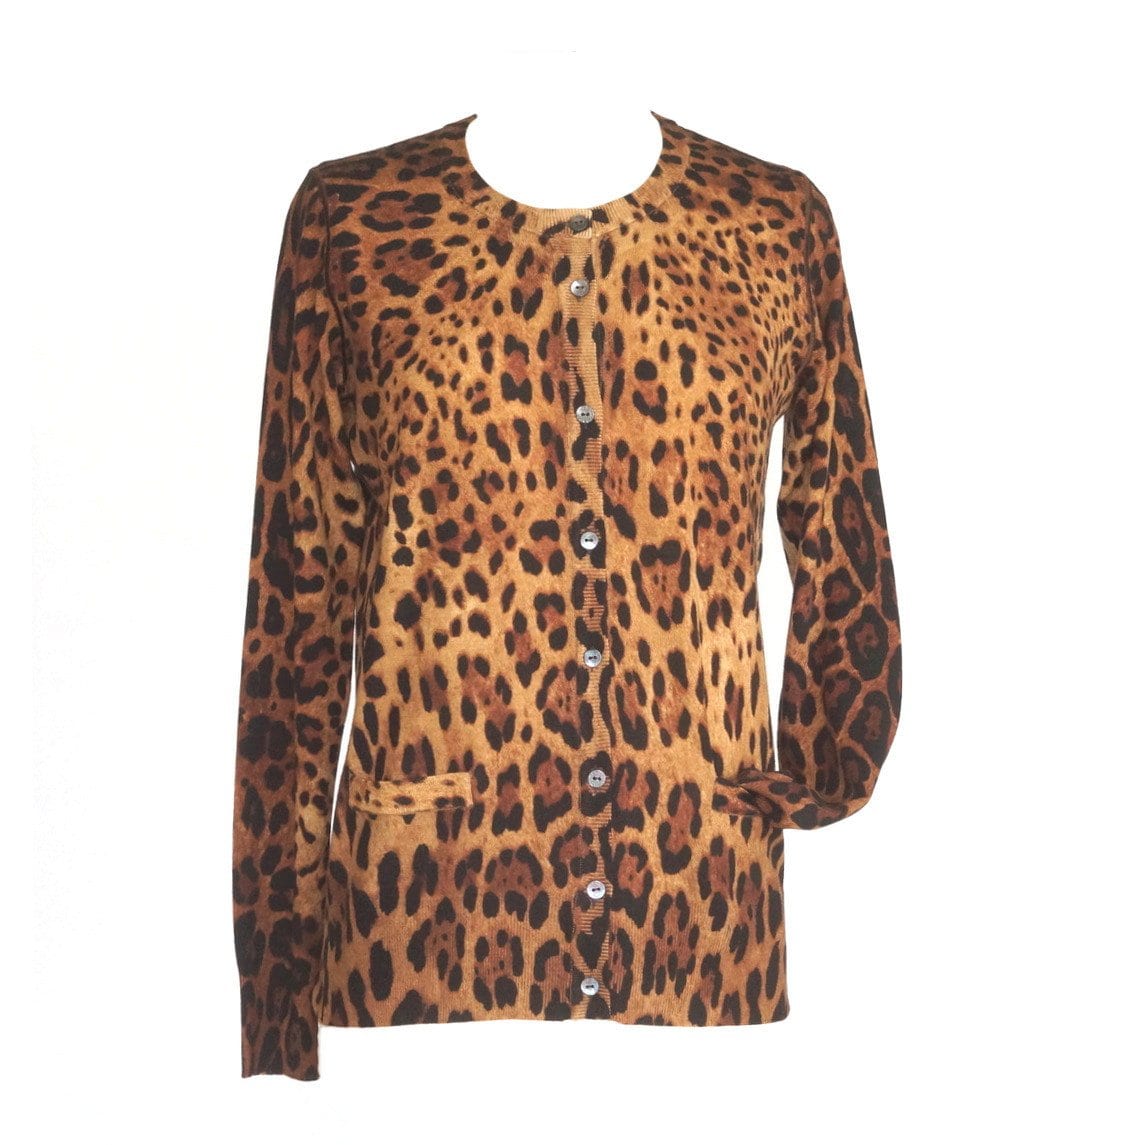 Dolce&Gabbana Sweater Leopard Print Cardigan Silk Cashmere Blend 42 / 8 - mightychic